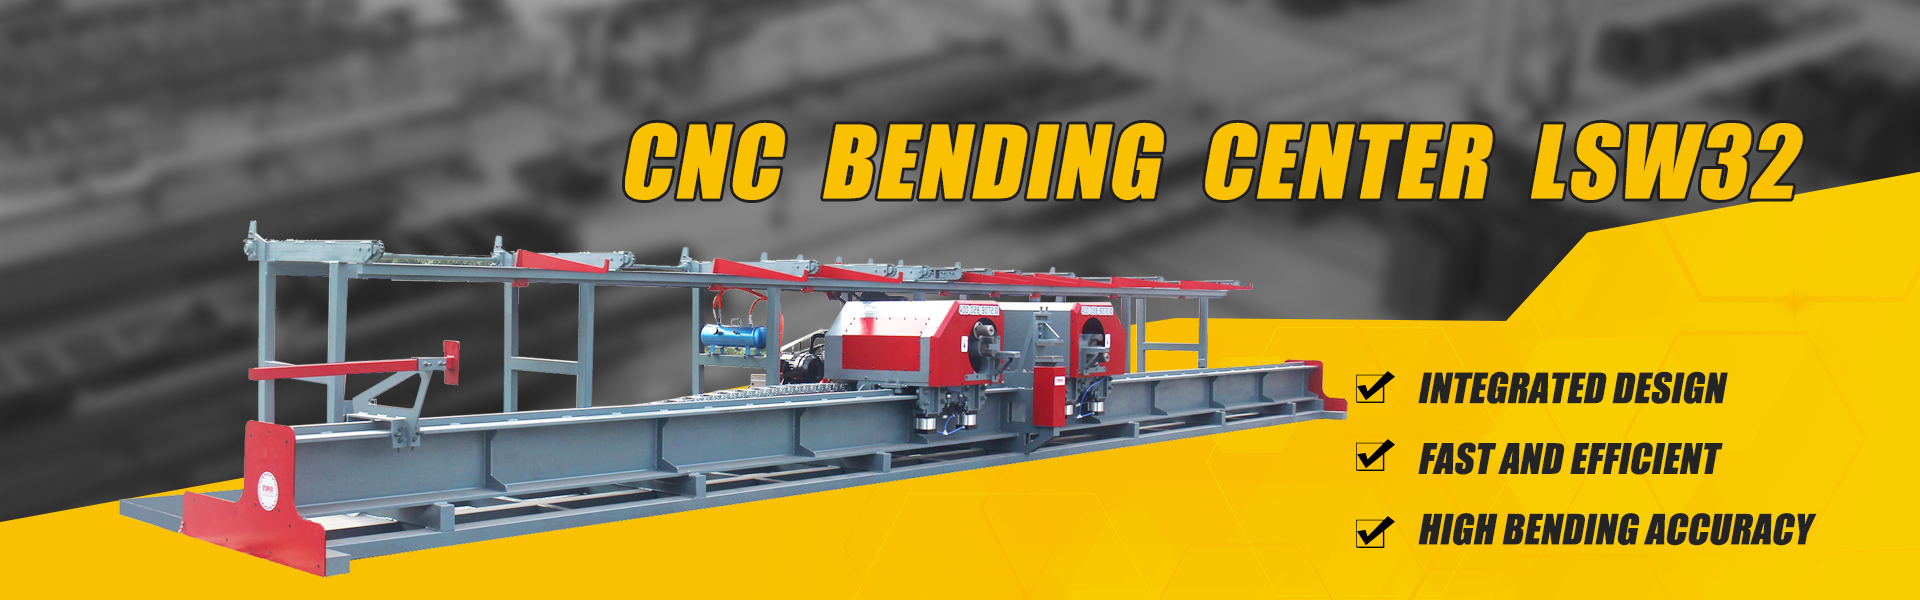 cnc bending machine,cnc wire bending machine,cnc rebar bending machine,cnc stirrup bending machine,cnc bending center 